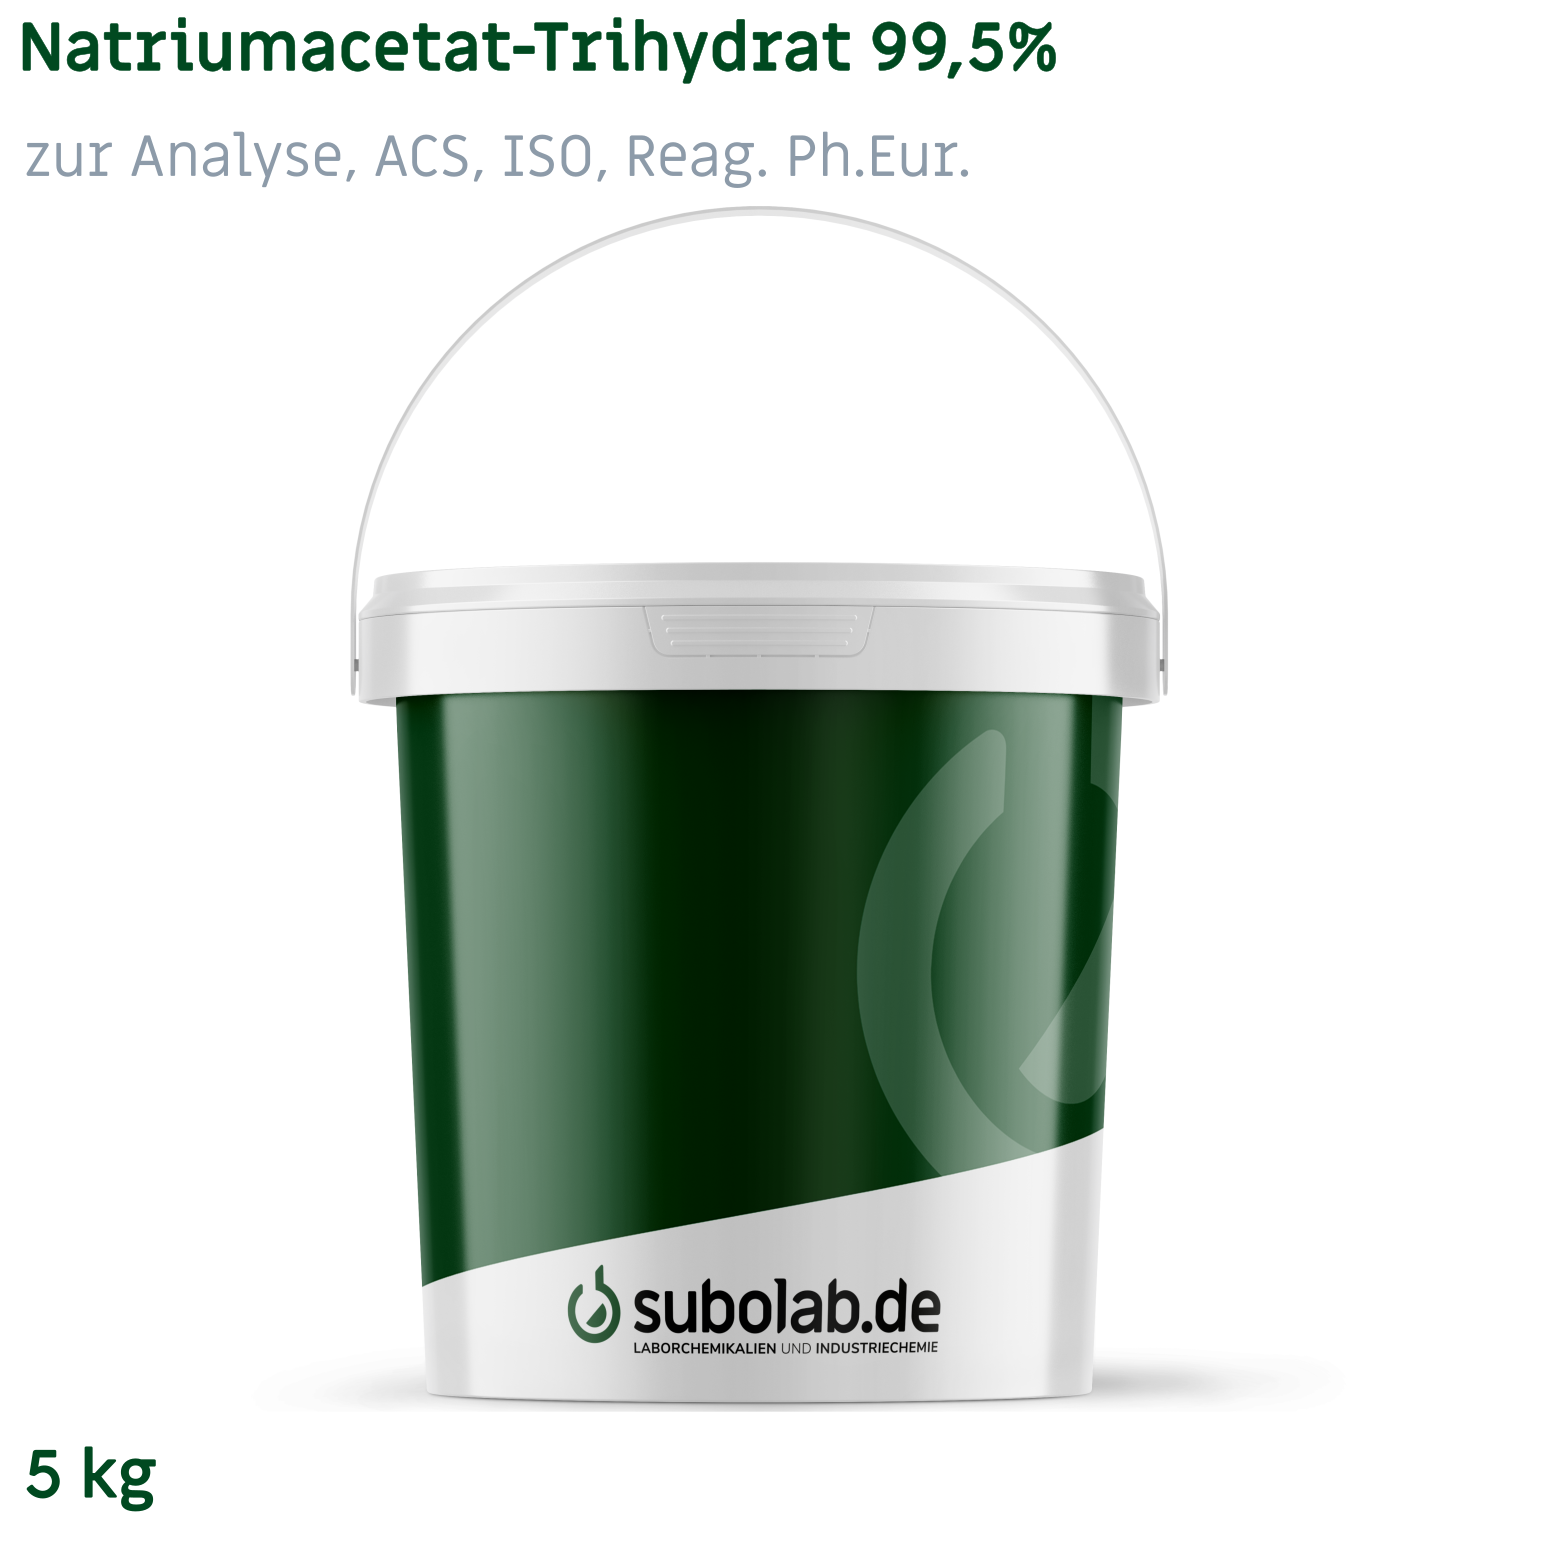 Bild von Natriumacetat - Trihydrat 99,5% zur Analyse, ACS, ISO, Reag. Ph.Eur. (5 kg)